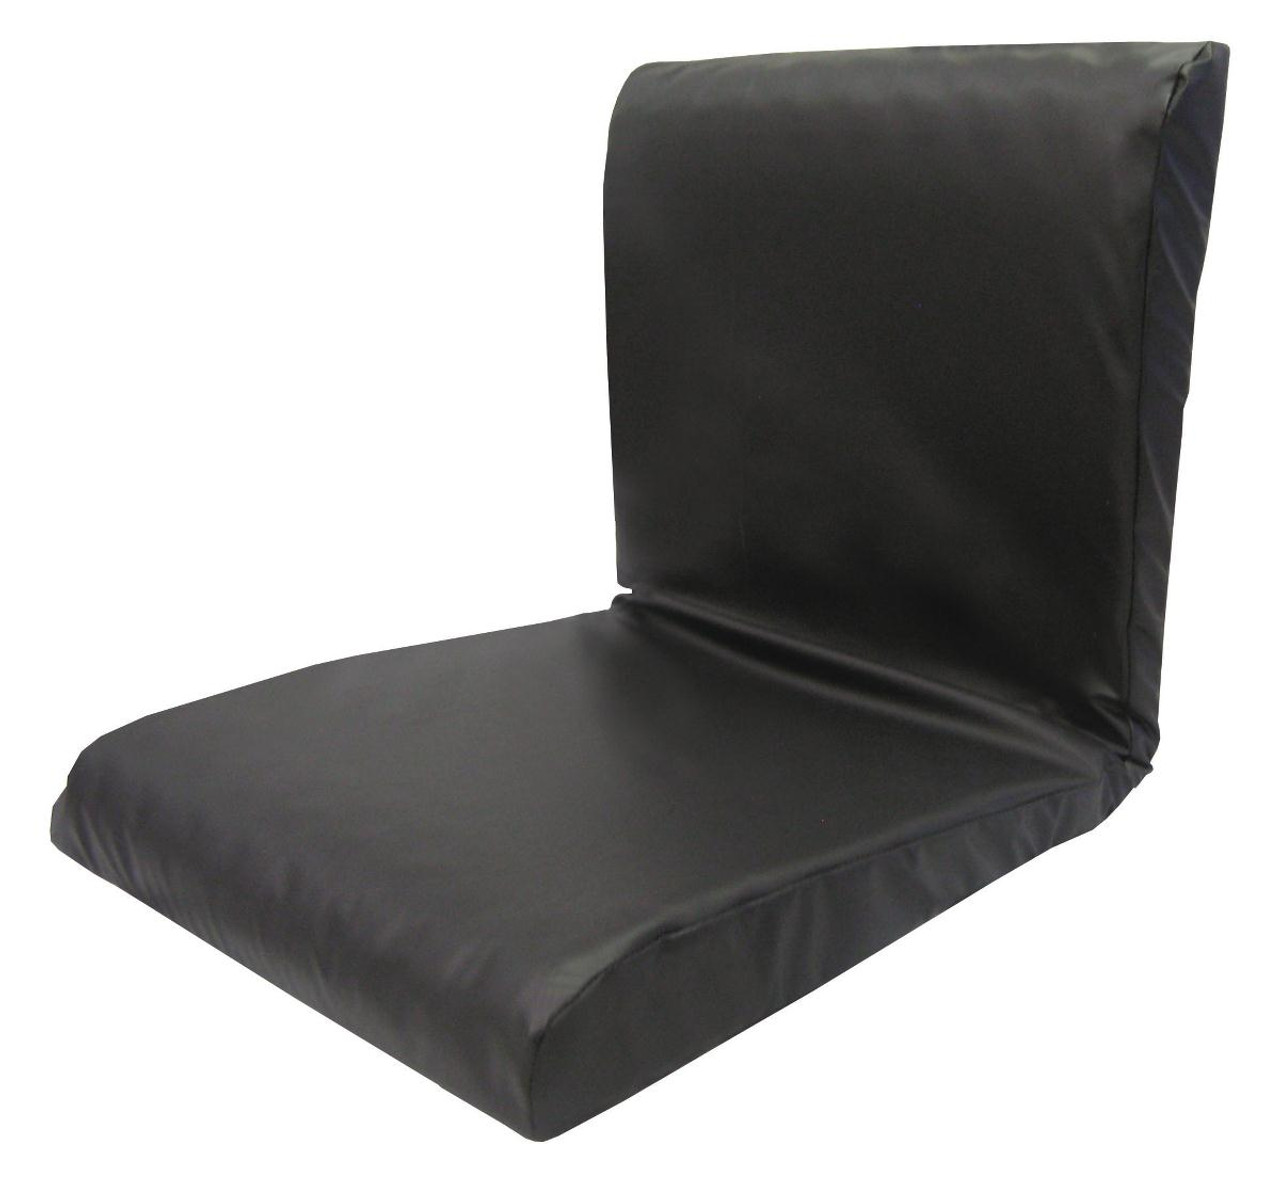 Medline MSCCOMB1816 Therapeutic Foam and Back Cushion Seat, 18" x 16"